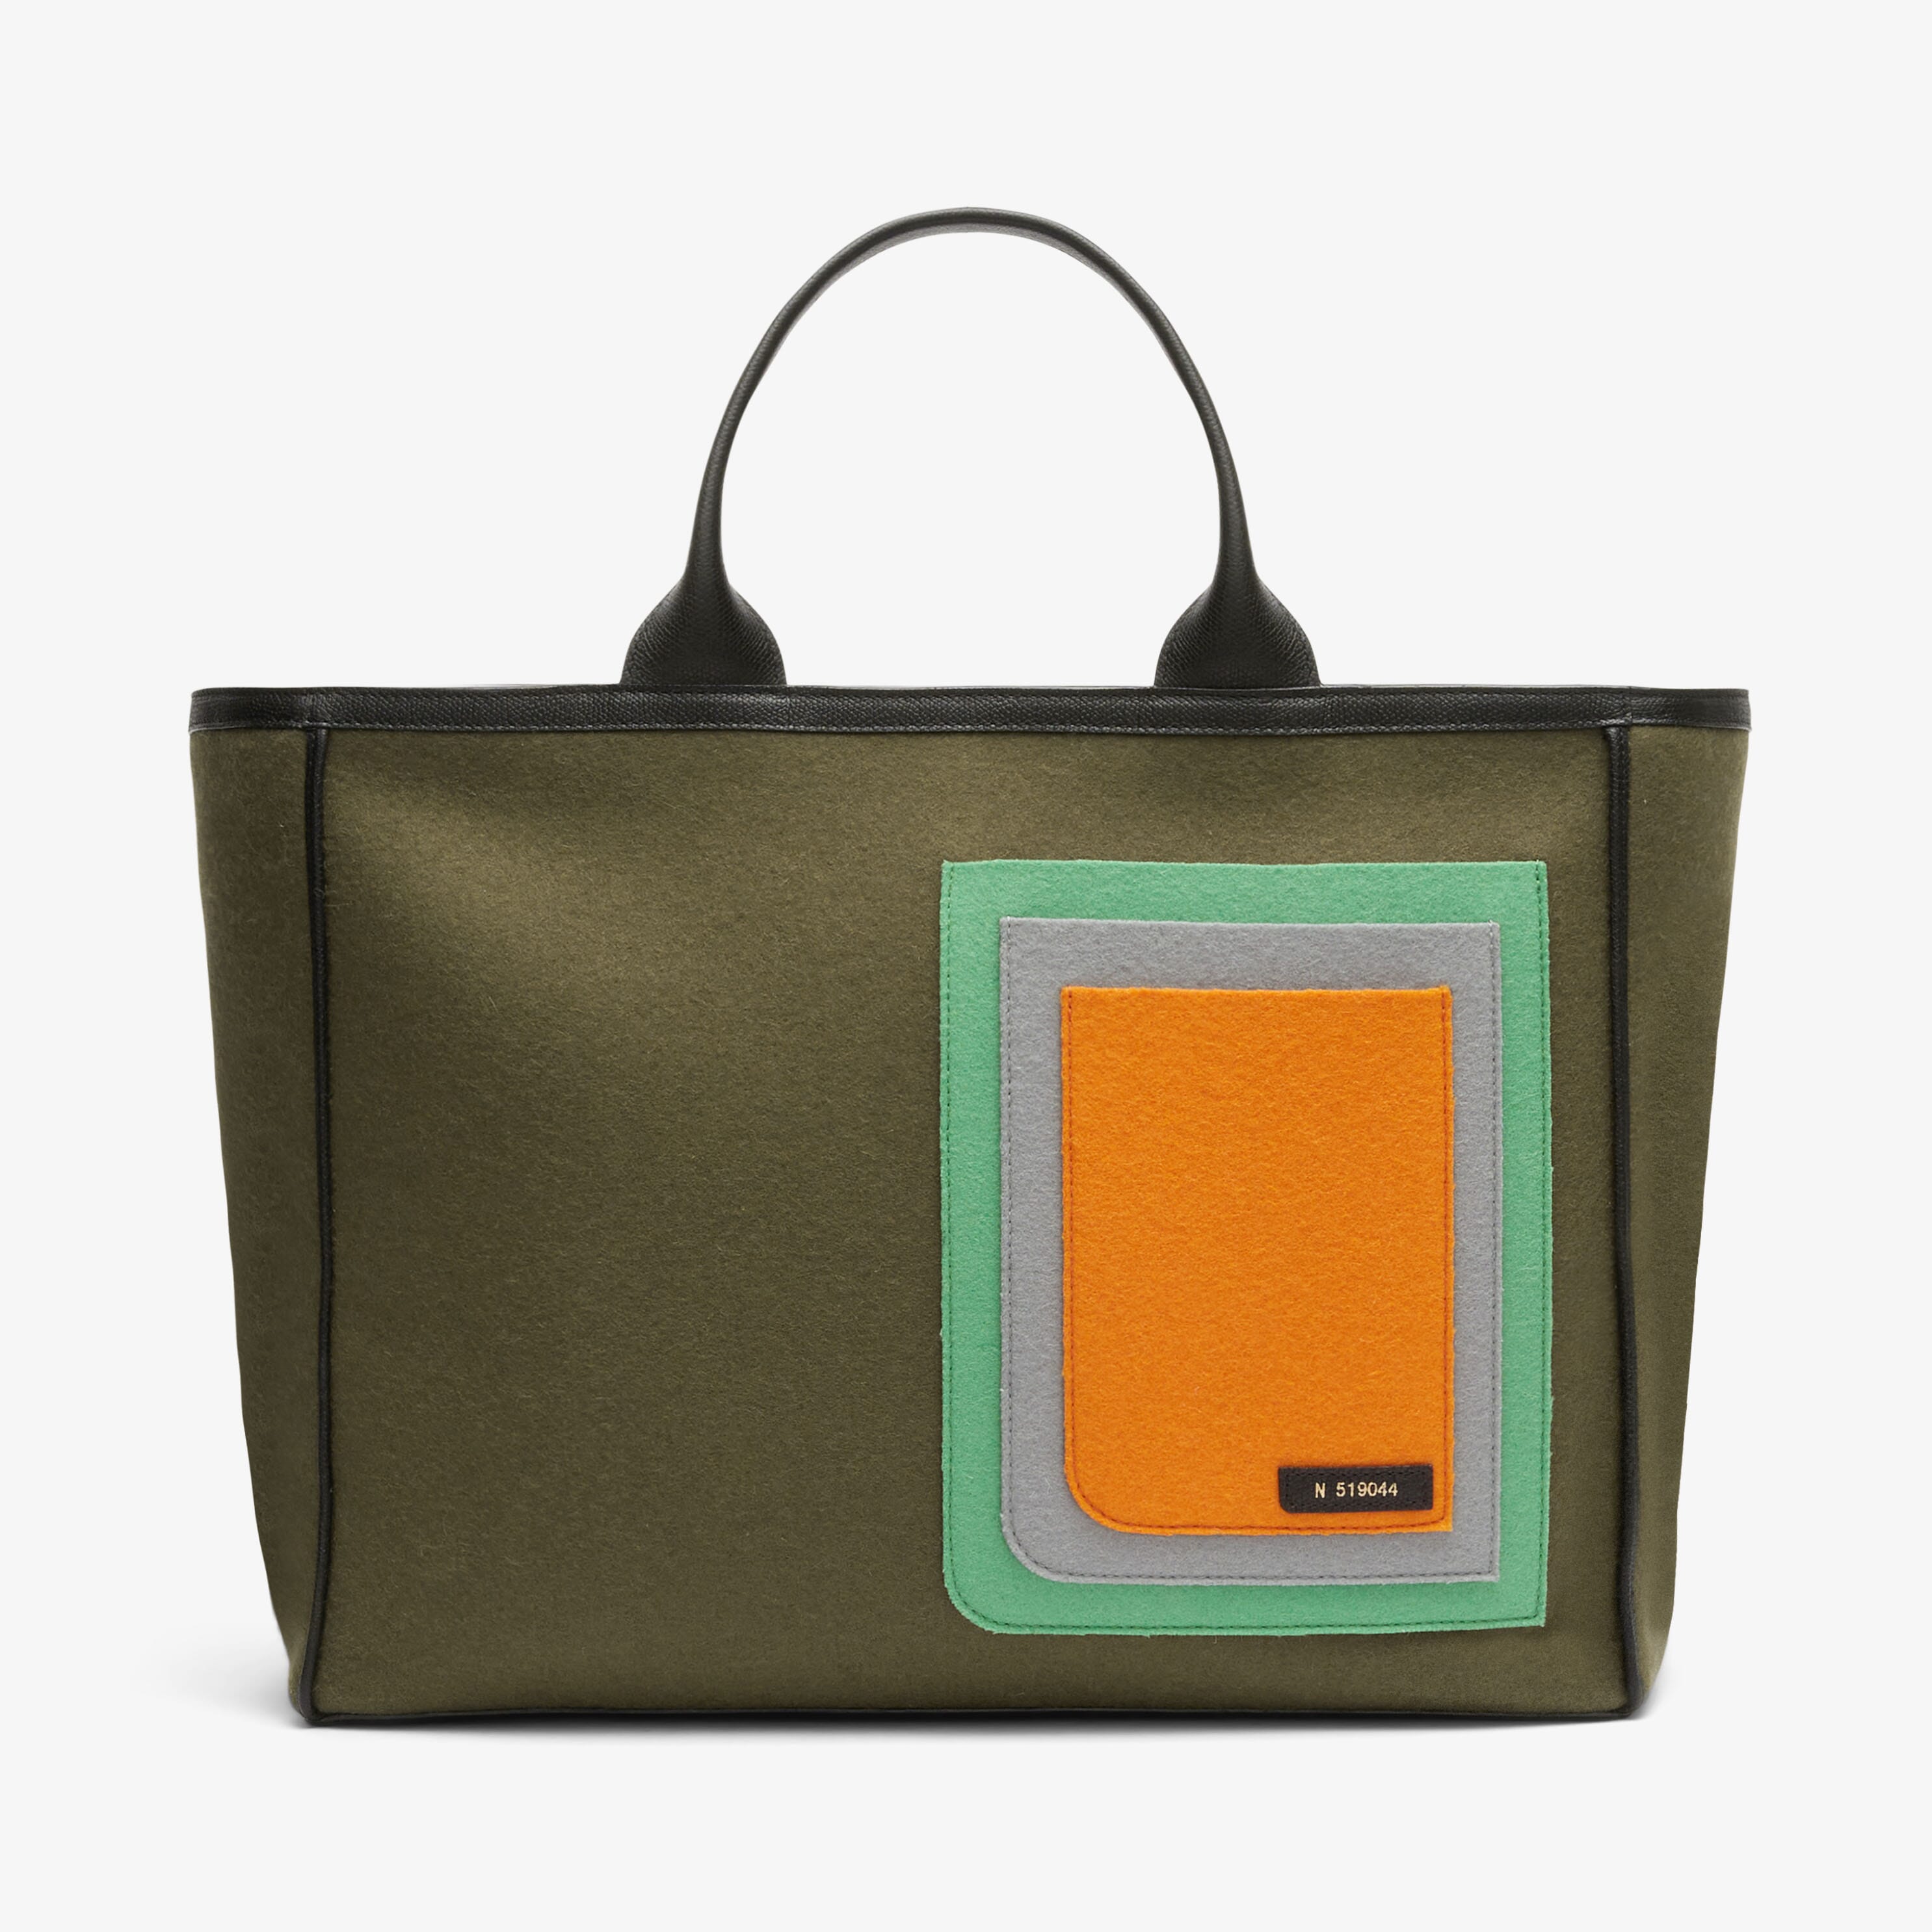 Soft Tote Felt Large Bag - Military Green/Grass Green/Ash Grey/Orange/Black - Feltro/Vitello VS - Valextra - 1